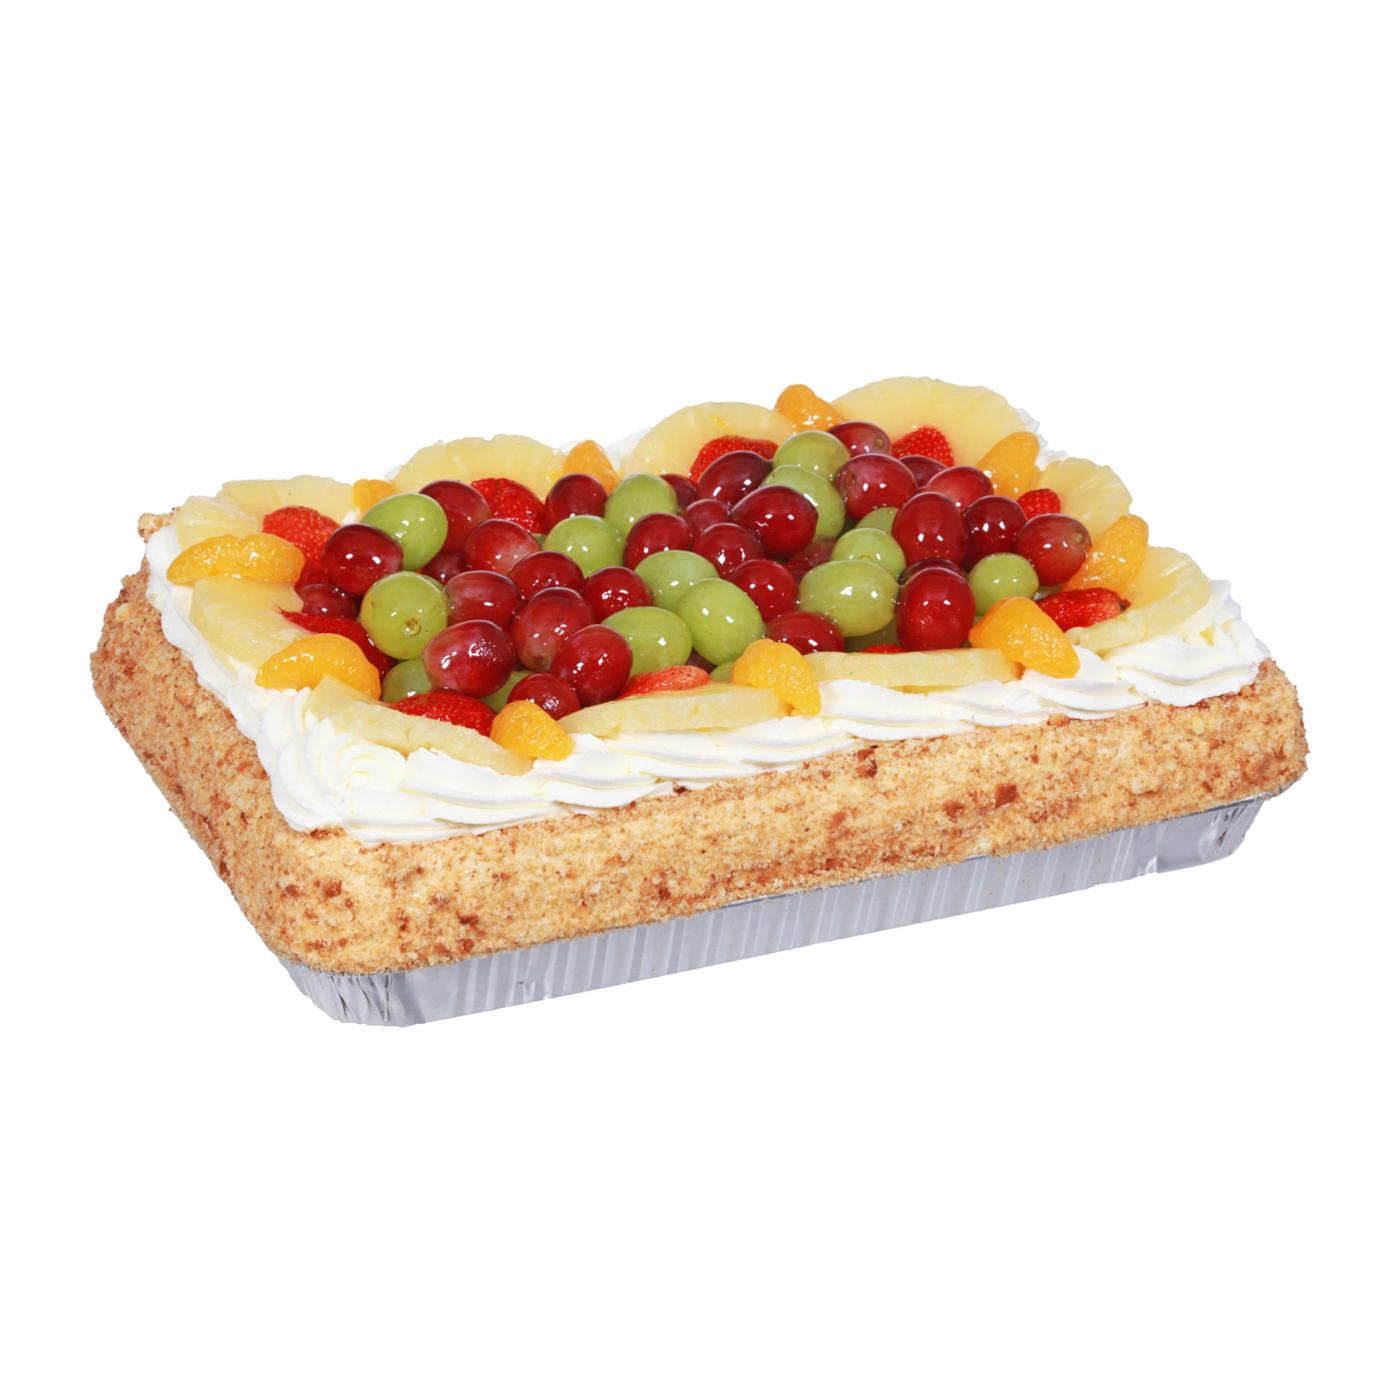 H-E-B Bakery Full Fruit Tres Leches Cake; image 2 of 2